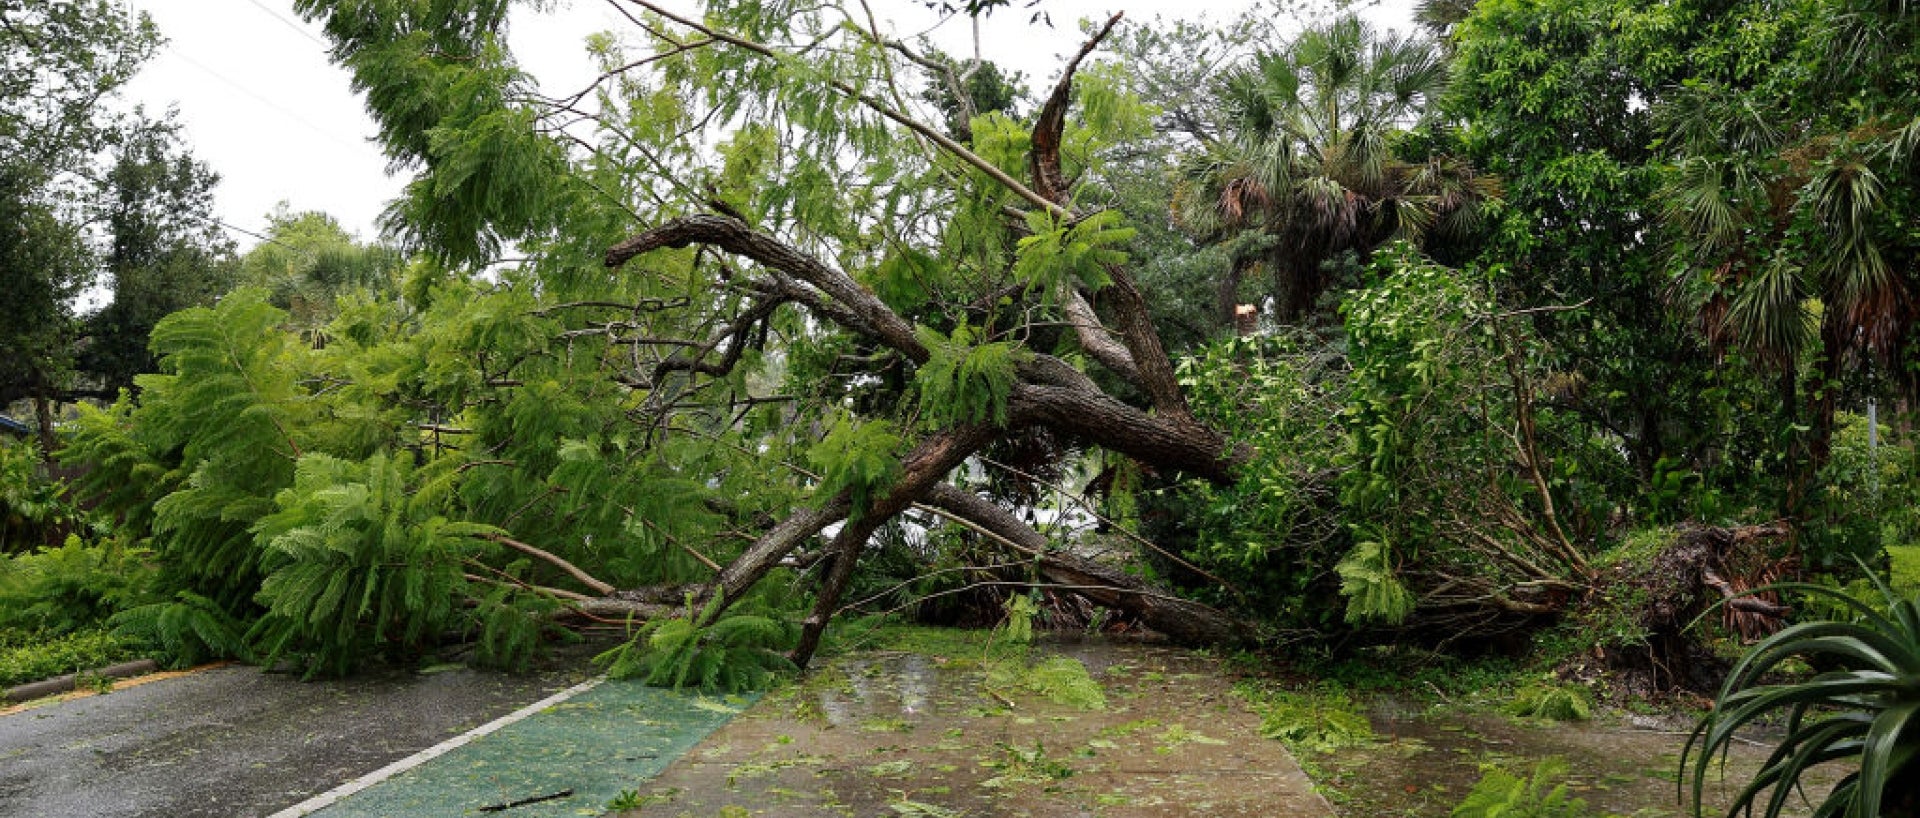 Fallen tree in Sarasota, Florida due to winds from Hurricane Ian